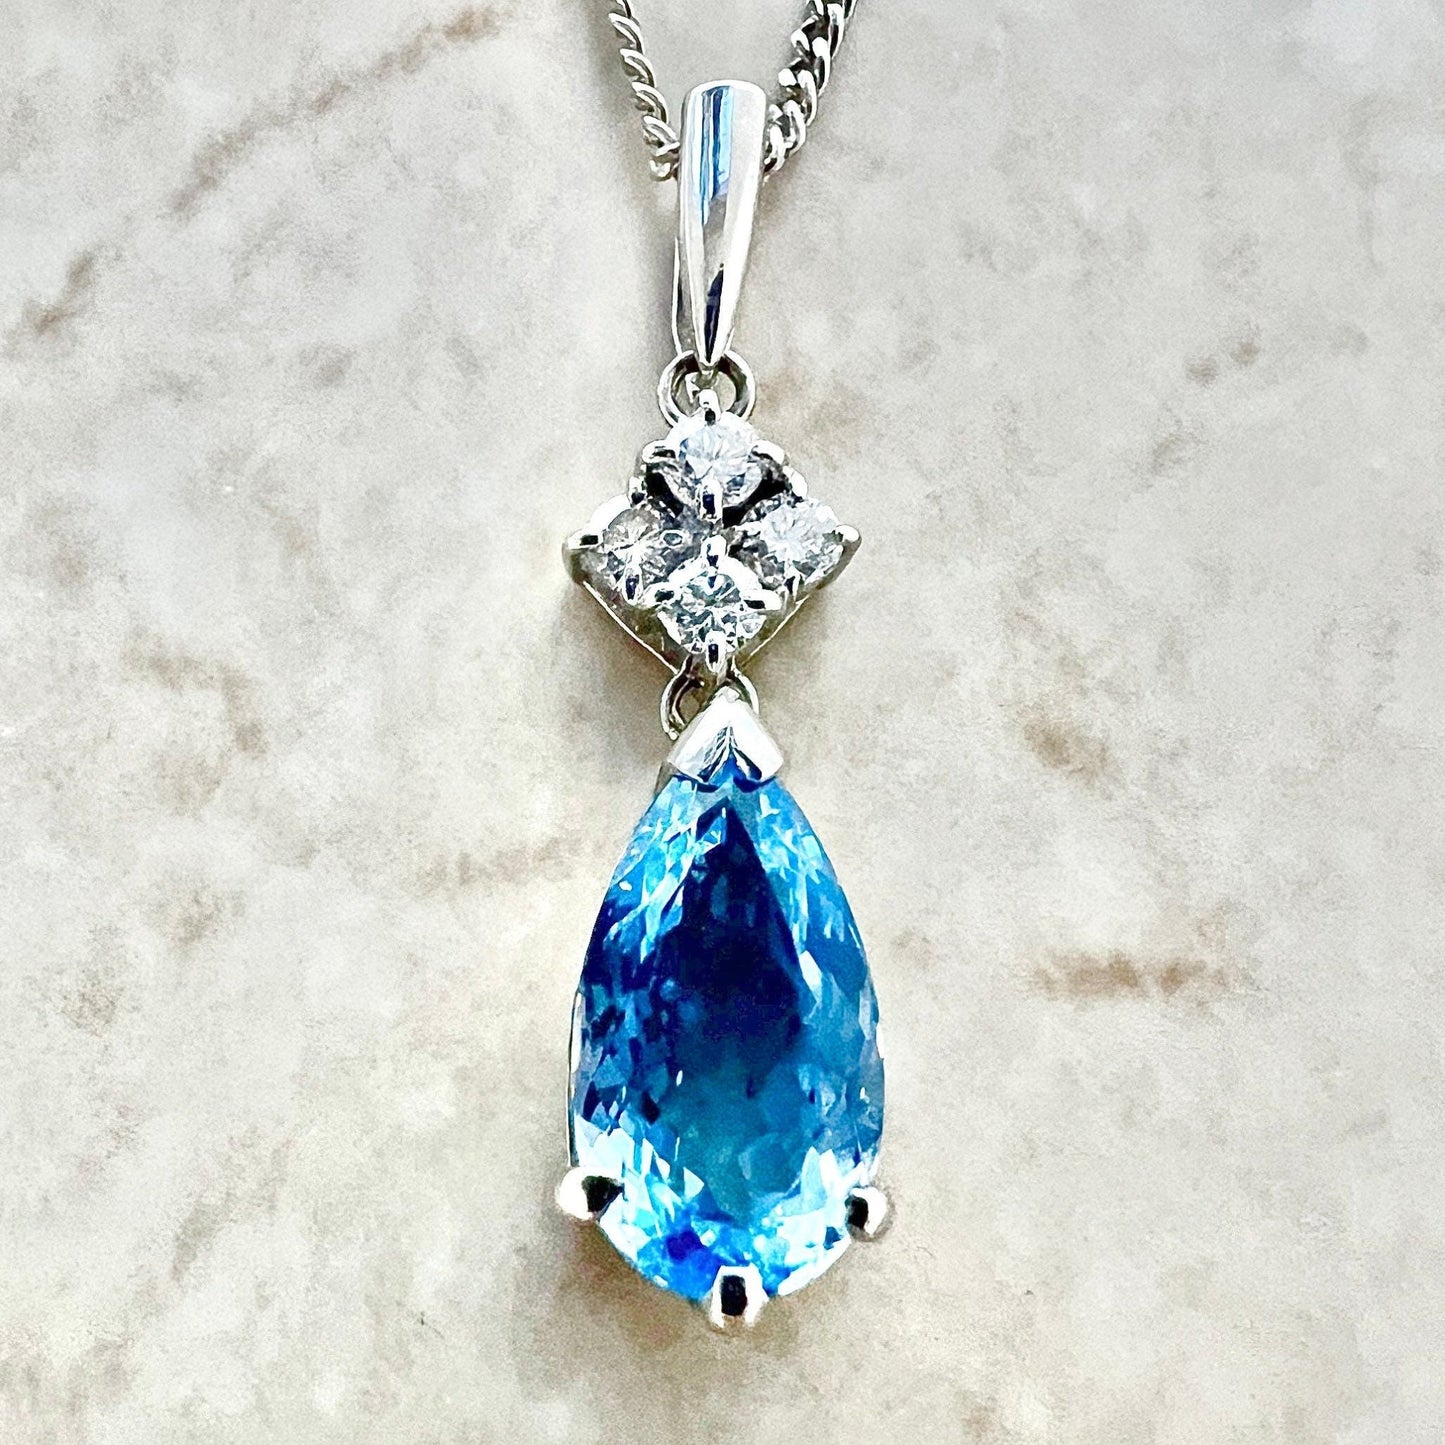 Fine Platinum Pear Shape Aquamarine & Diamond Pendant Necklace - Aquamarine Pendant - March Birthstone - Aquamarine Necklace - Holiday Gifts